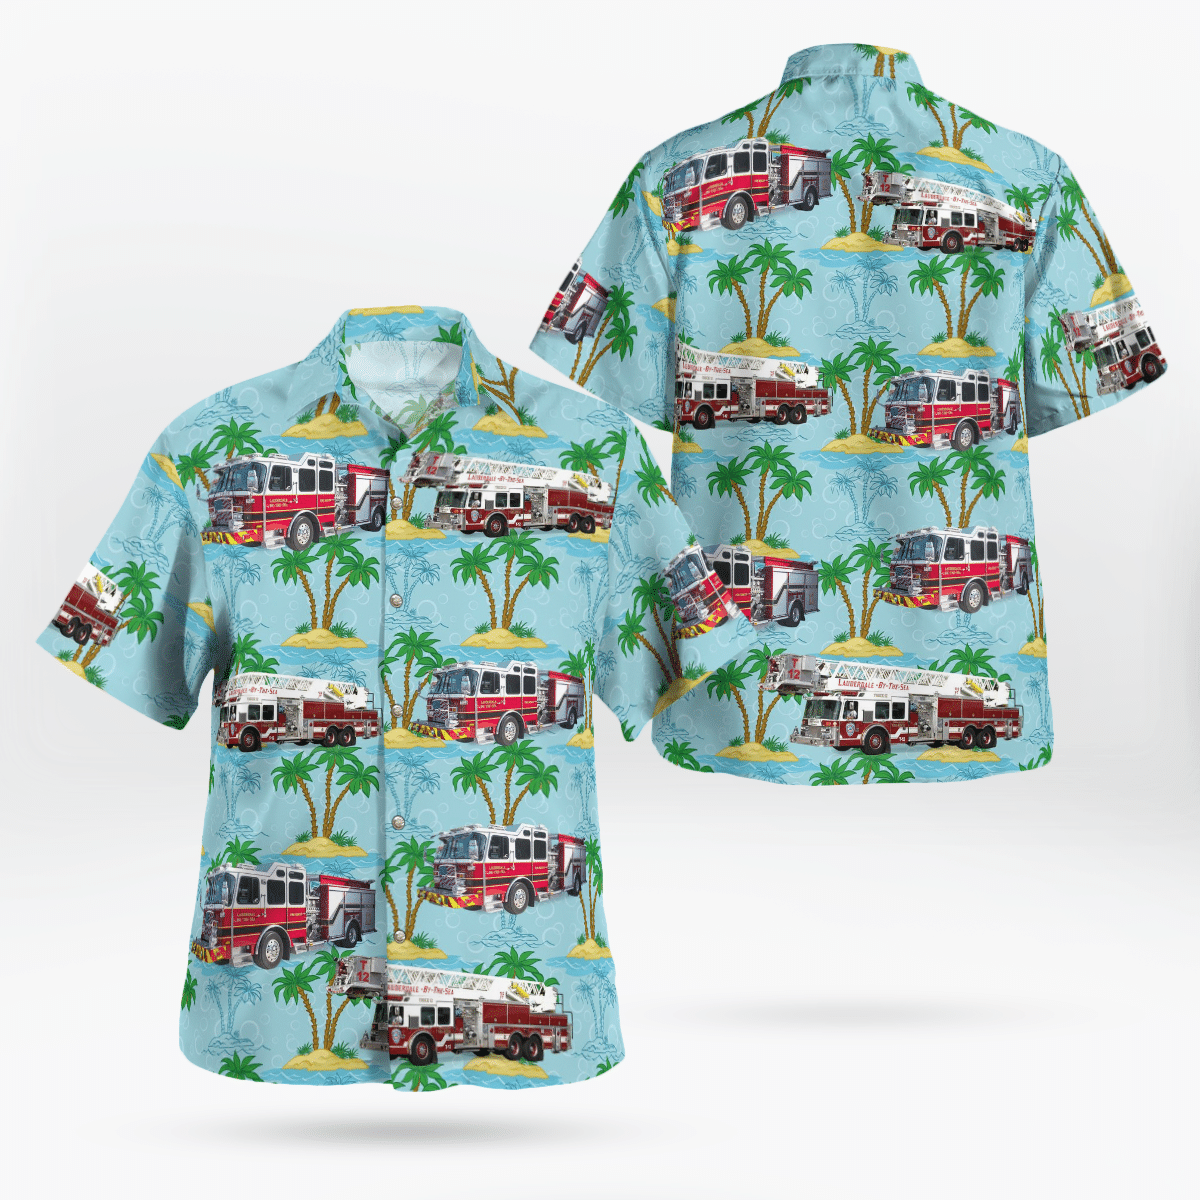 Listed below are some High-quality Aloha Shirt 473